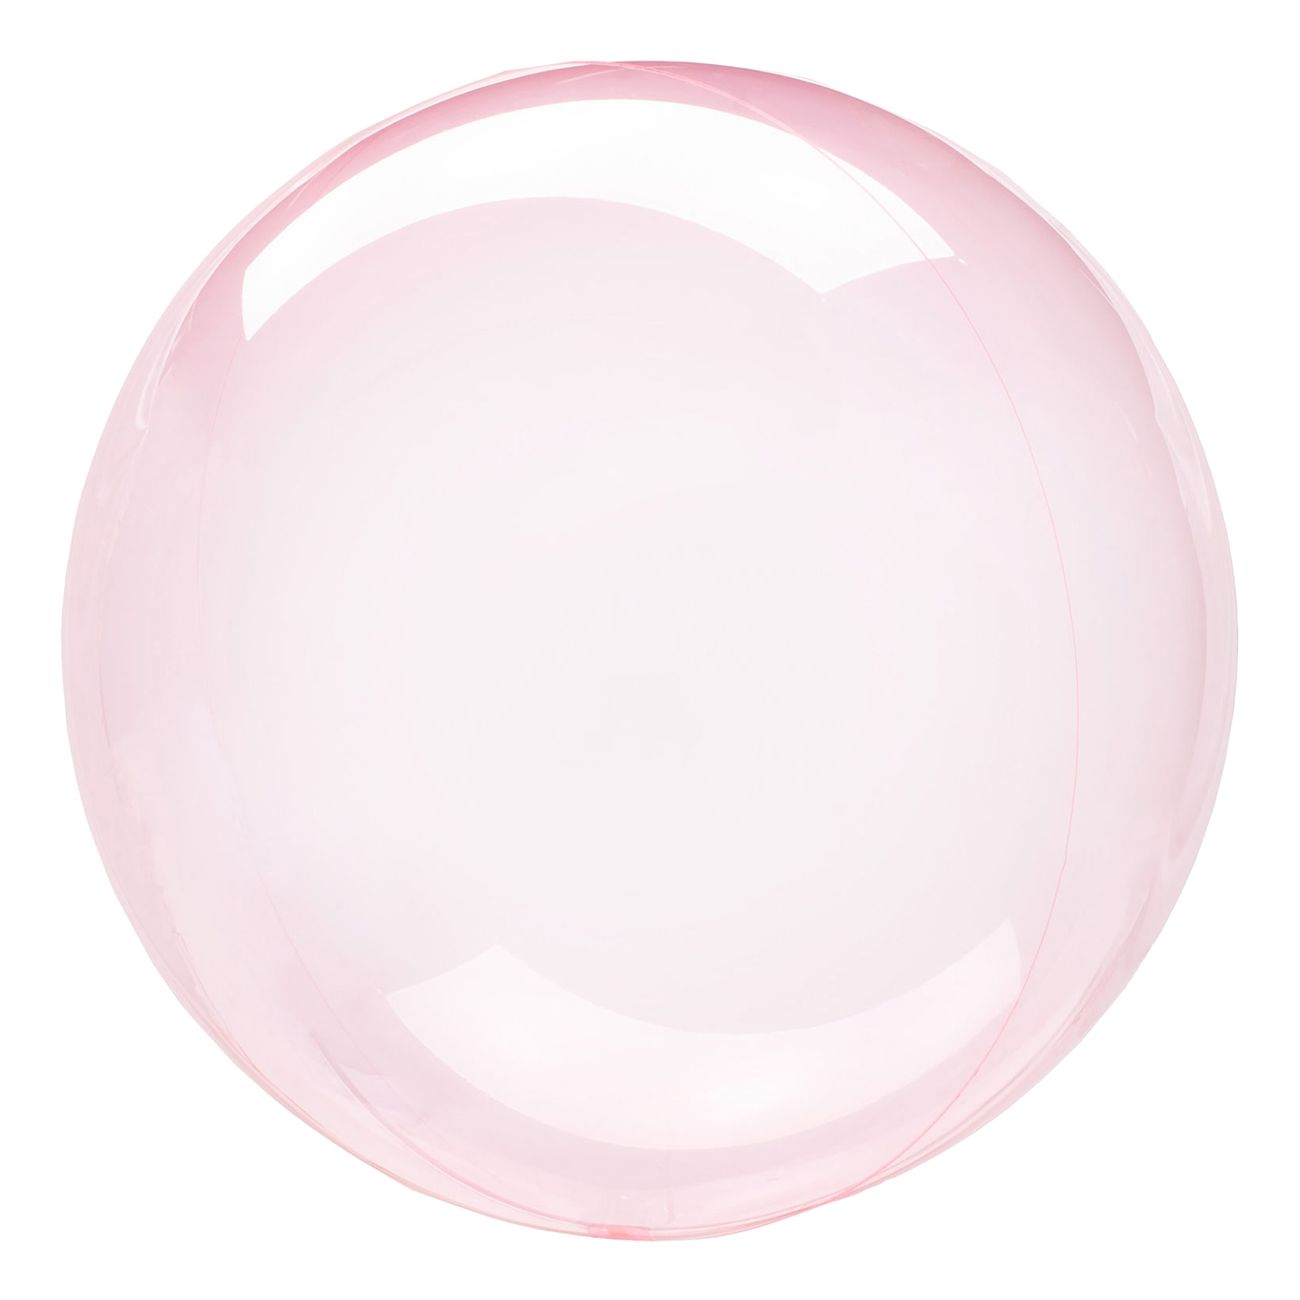 folieballong-crystal-clear-rund-rosa-95642-1